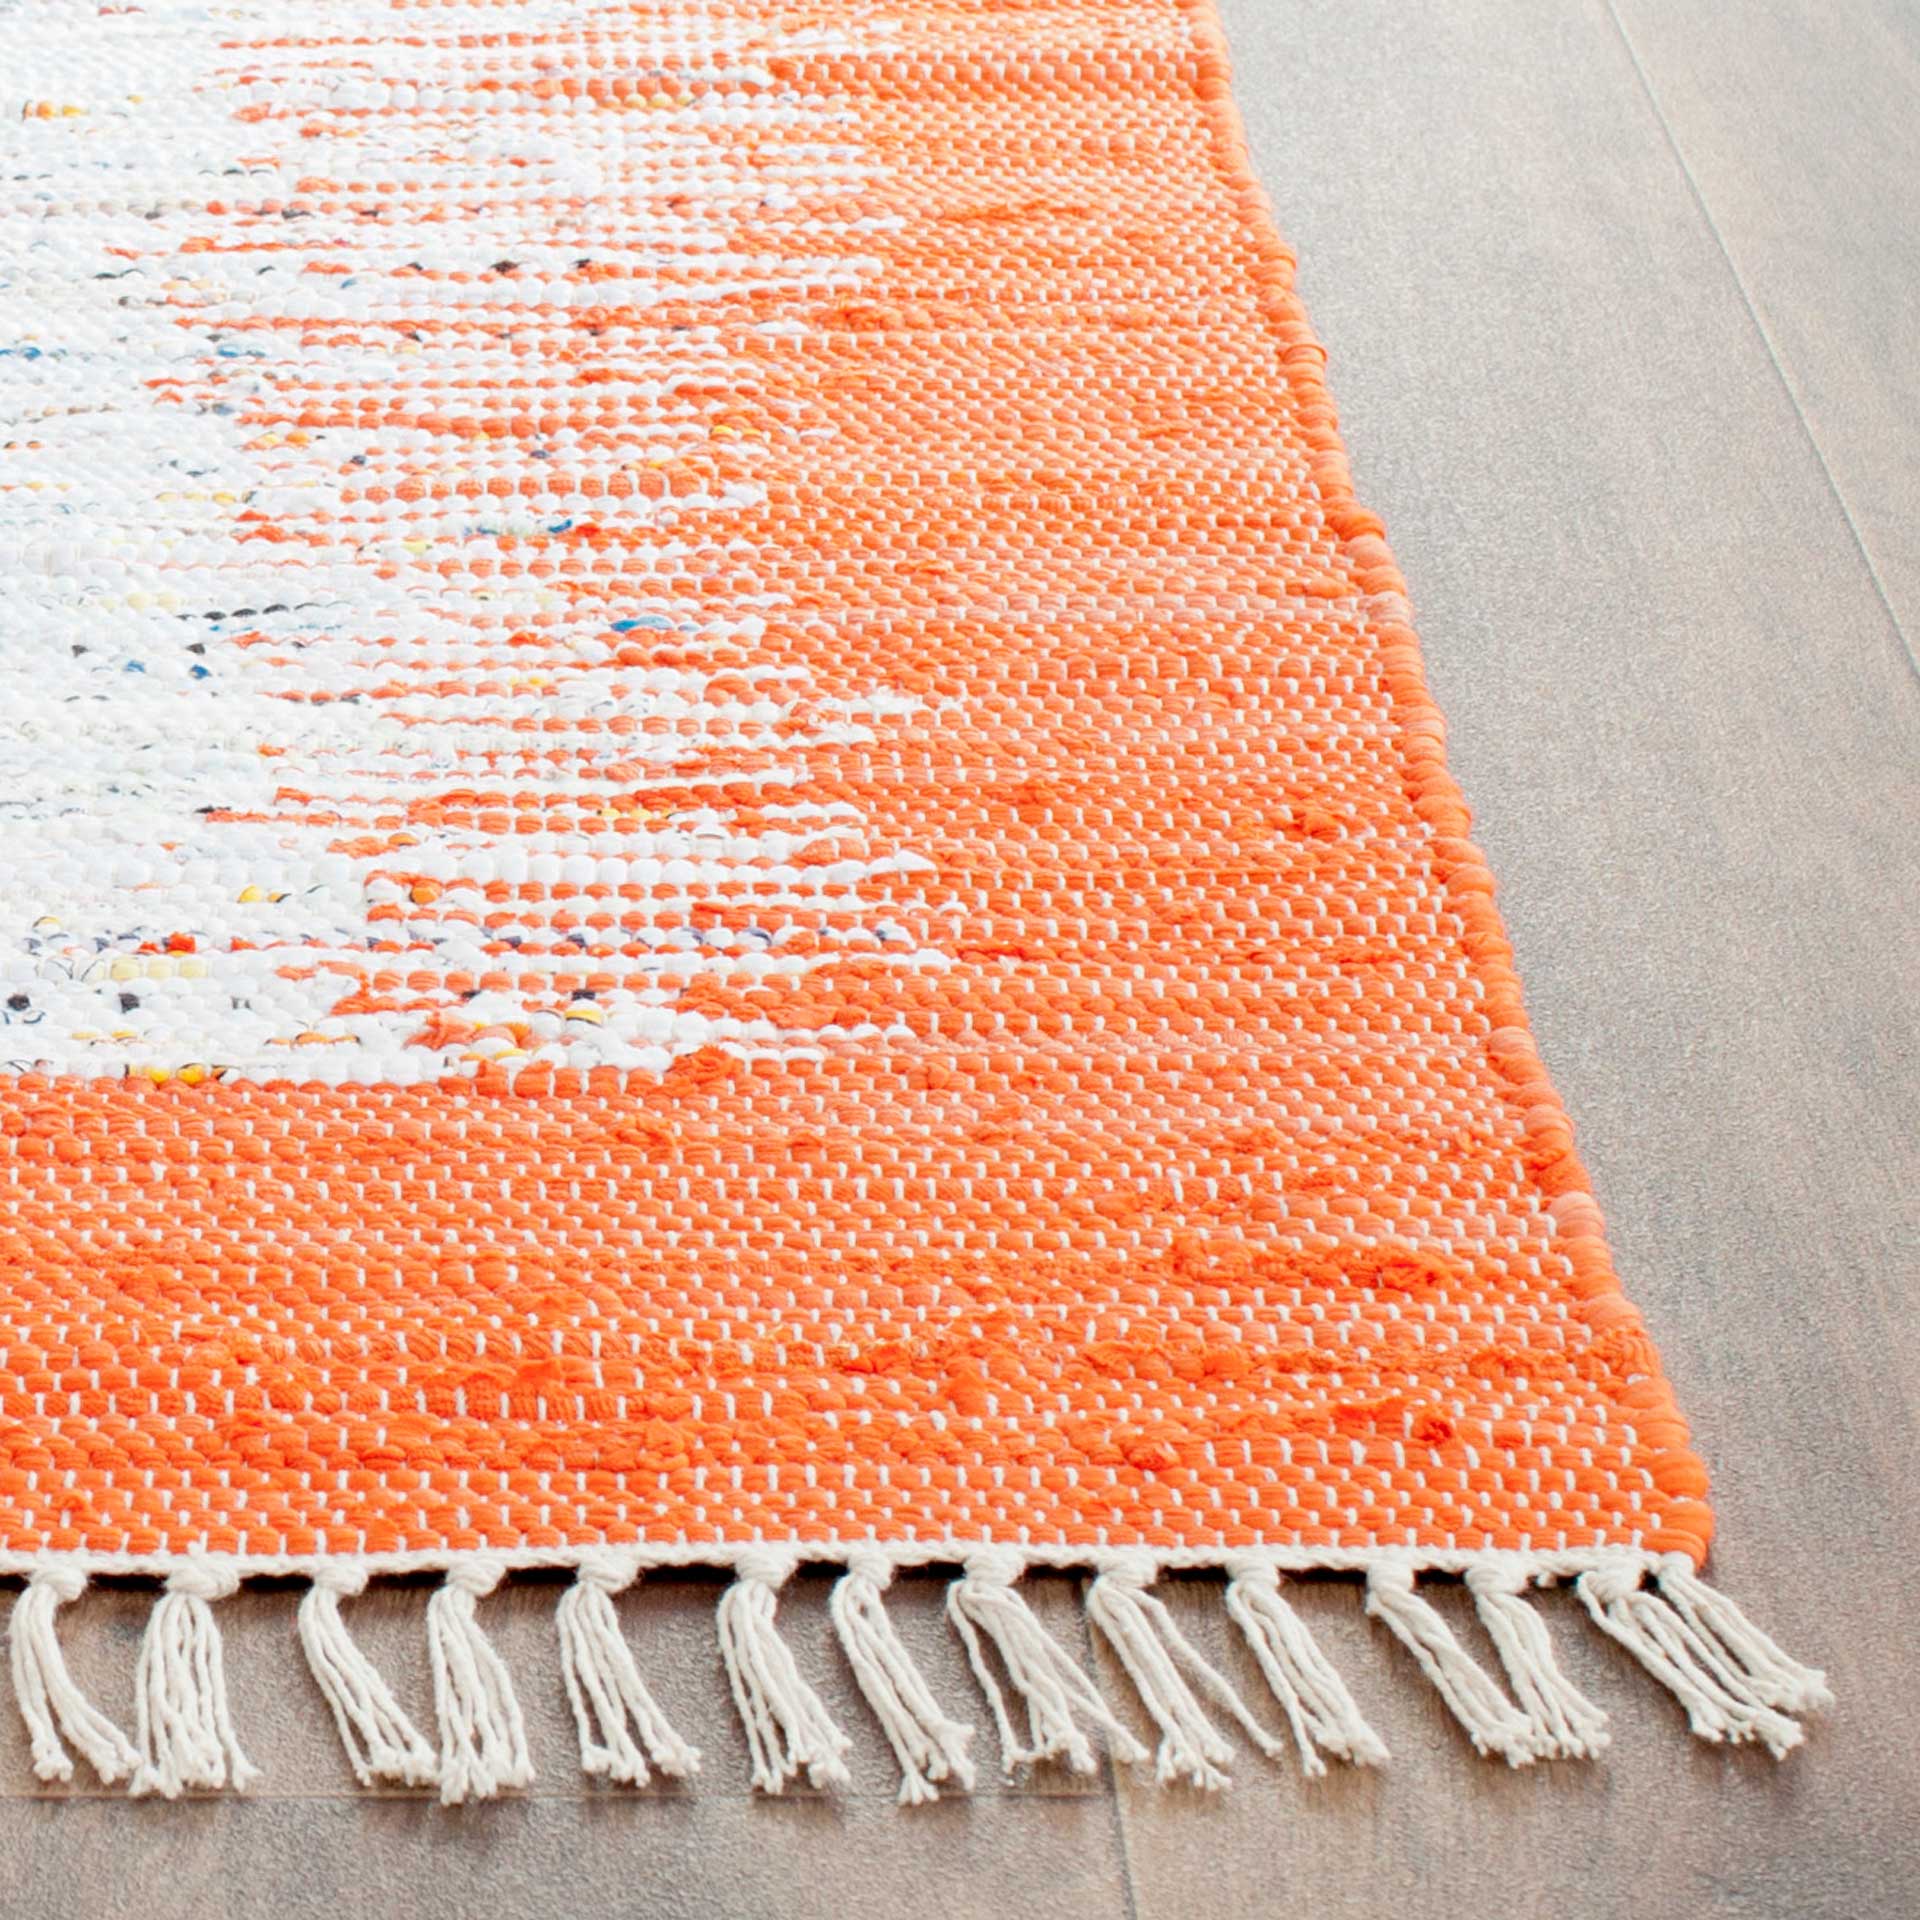 European (French or Russian) Chain Stitch Carpet 11’6” X 12’0” #7876